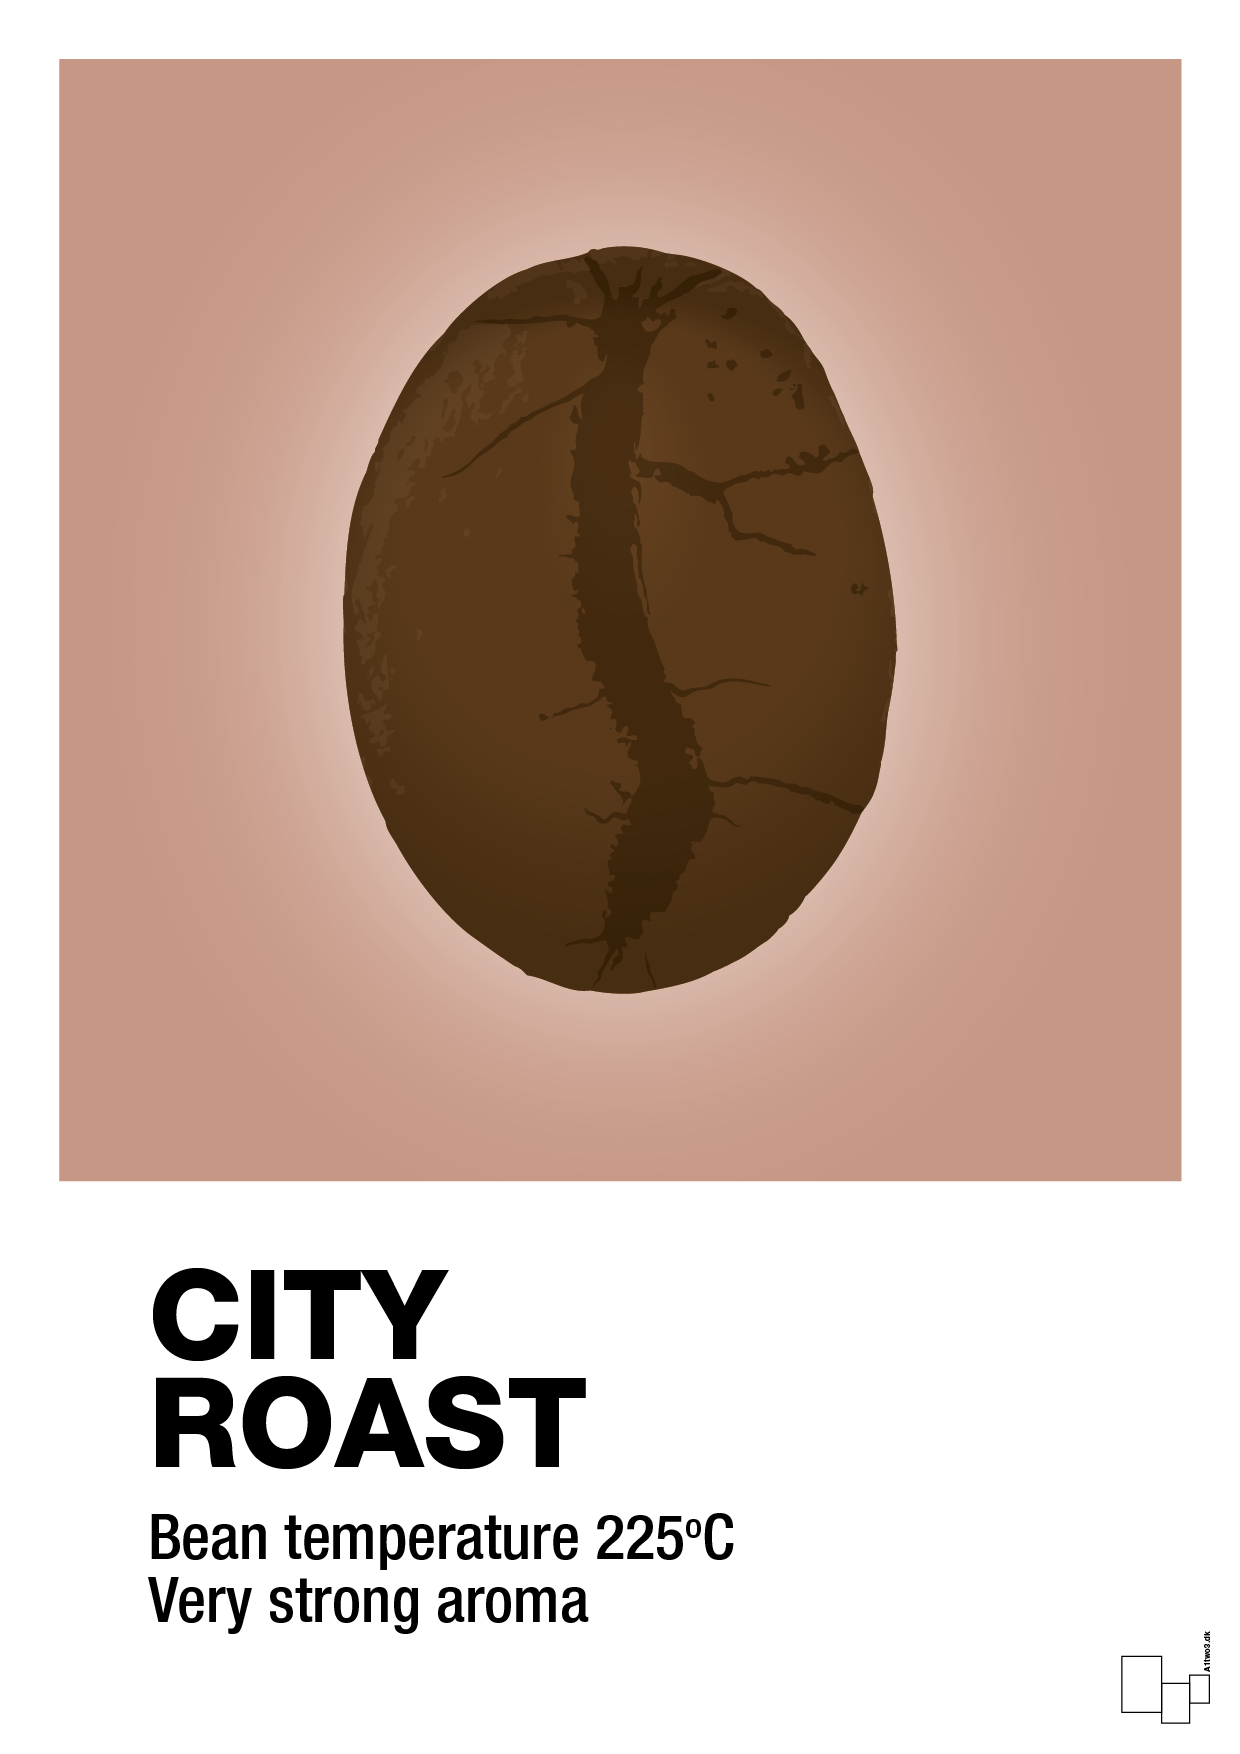 city roast - Plakat med Mad & Drikke i Powder